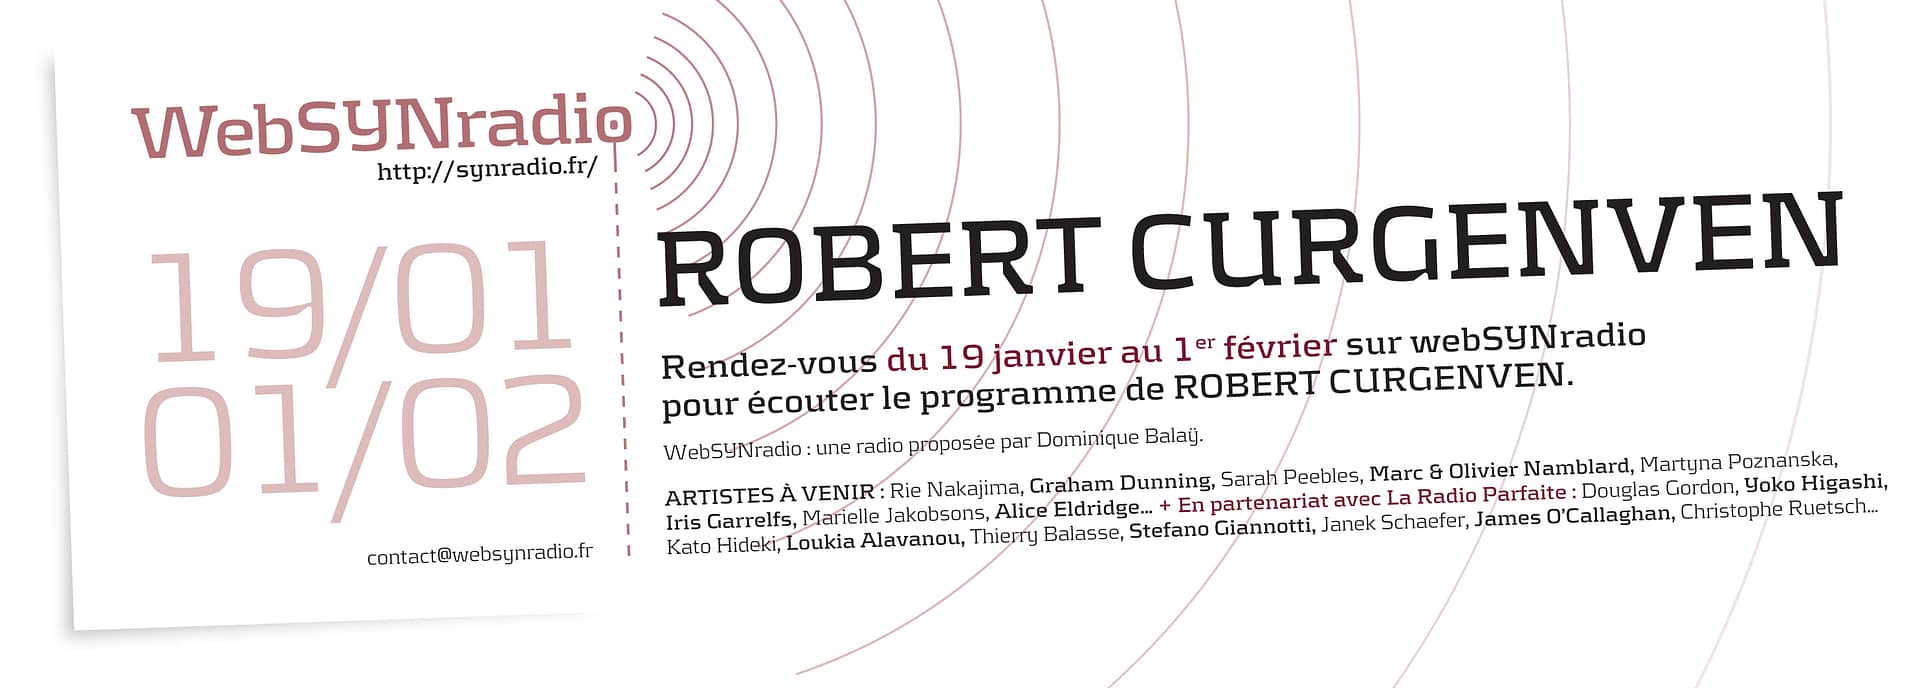 Robert Curgenven websynradio